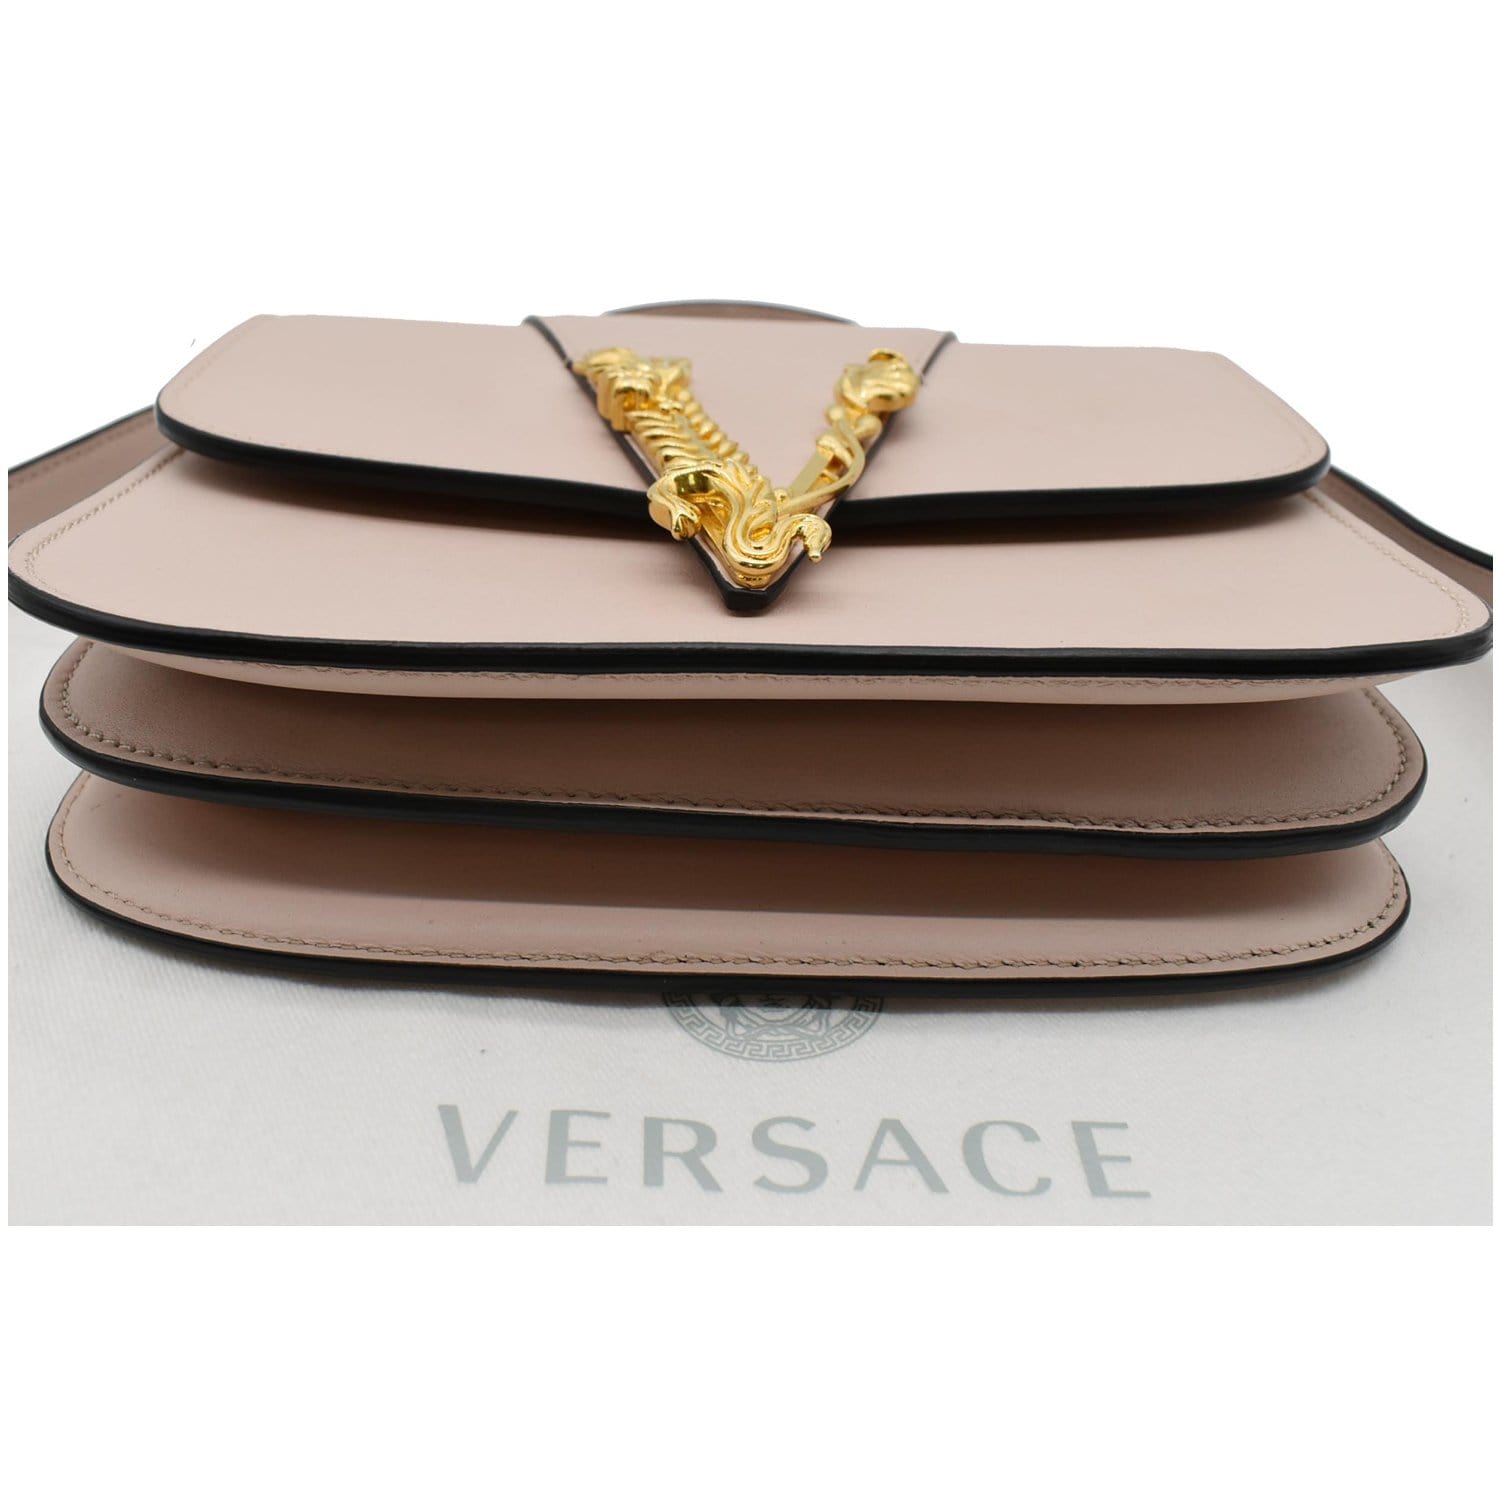 Auth New Versace Virtus dual-carry Handbag Purse Shoulder Bag